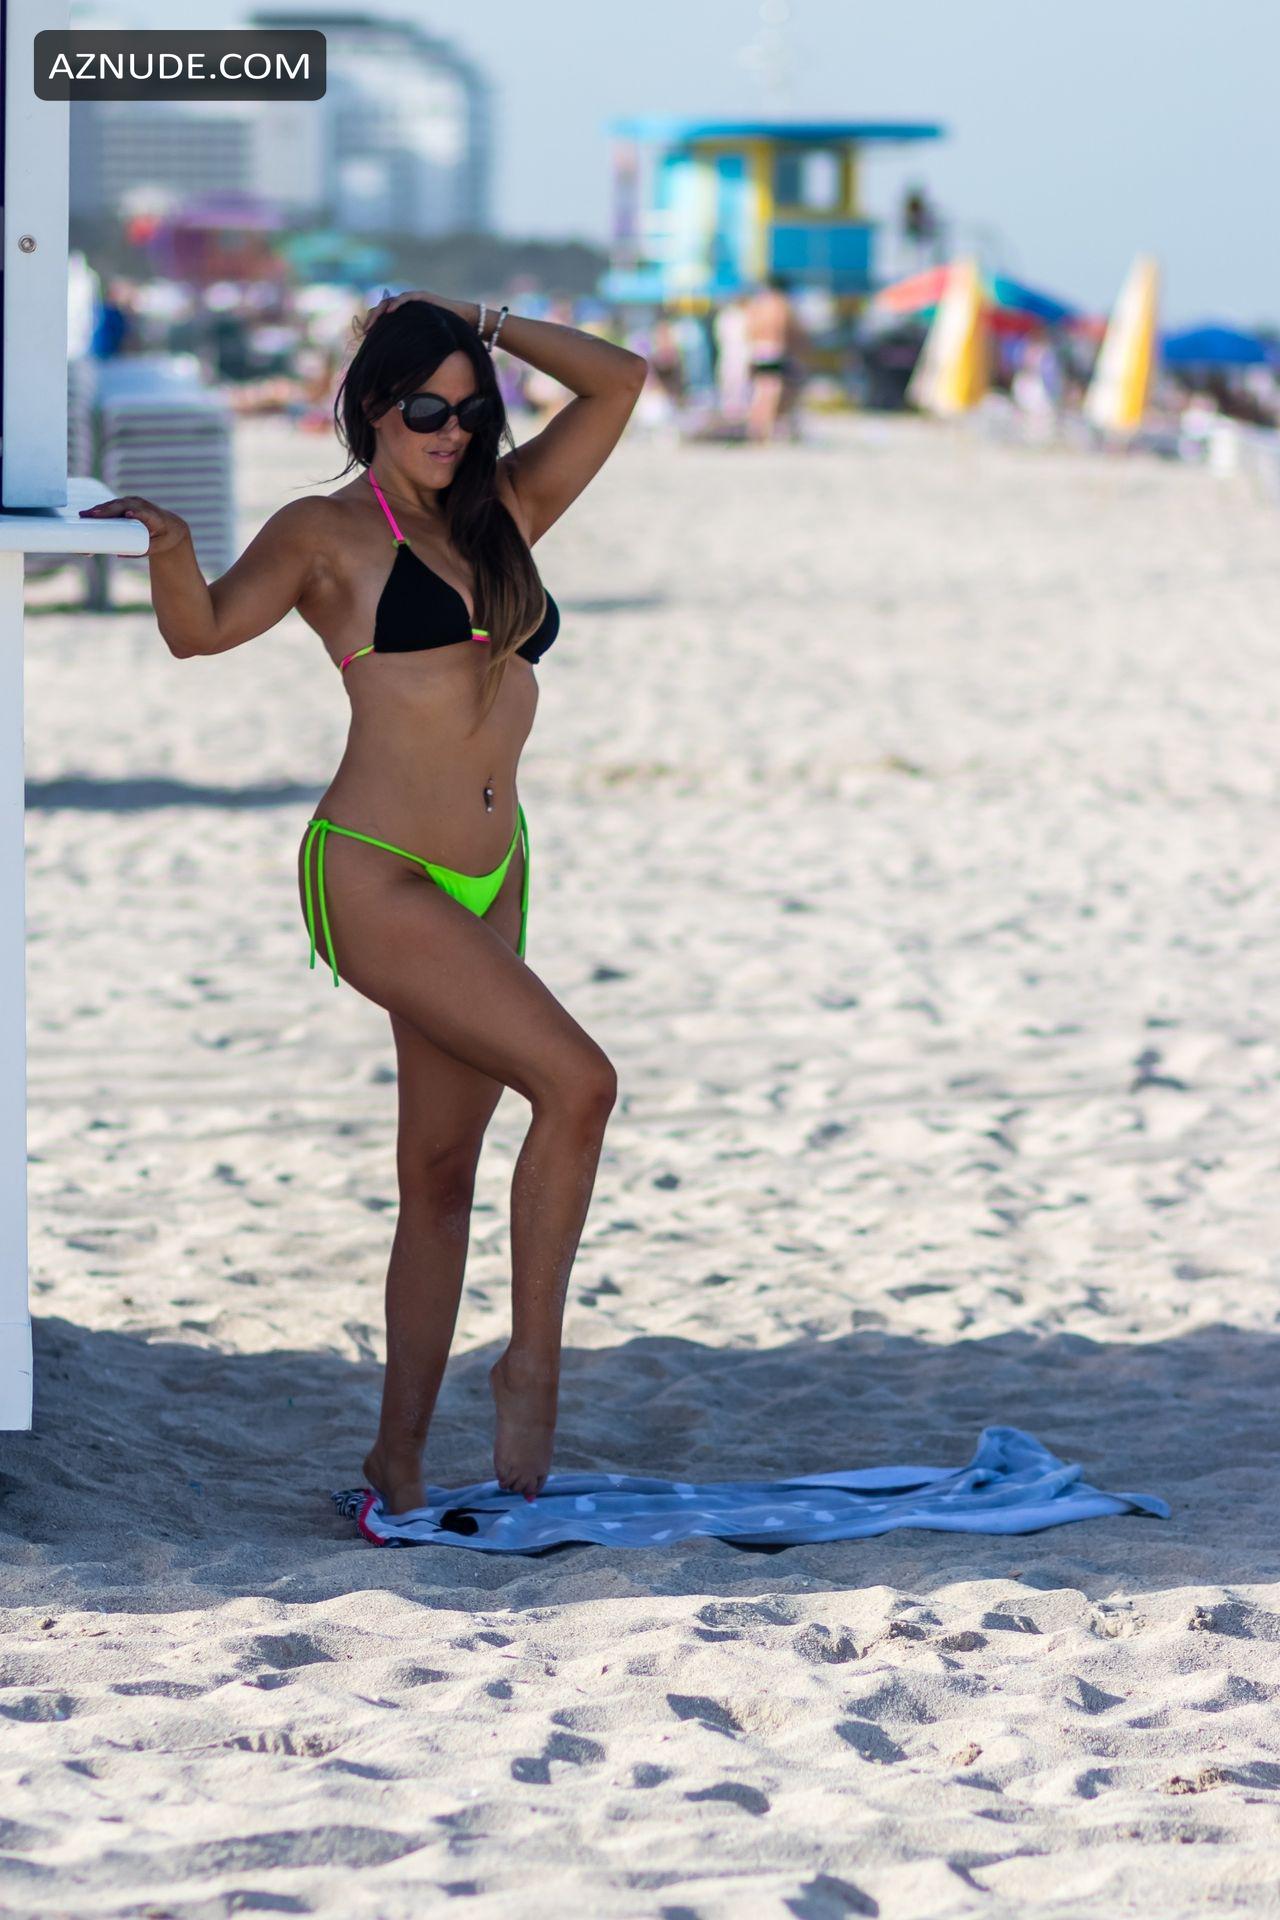 Claudia Romani Sexy In A Neon Lime Black And Pink Thong Bikini While